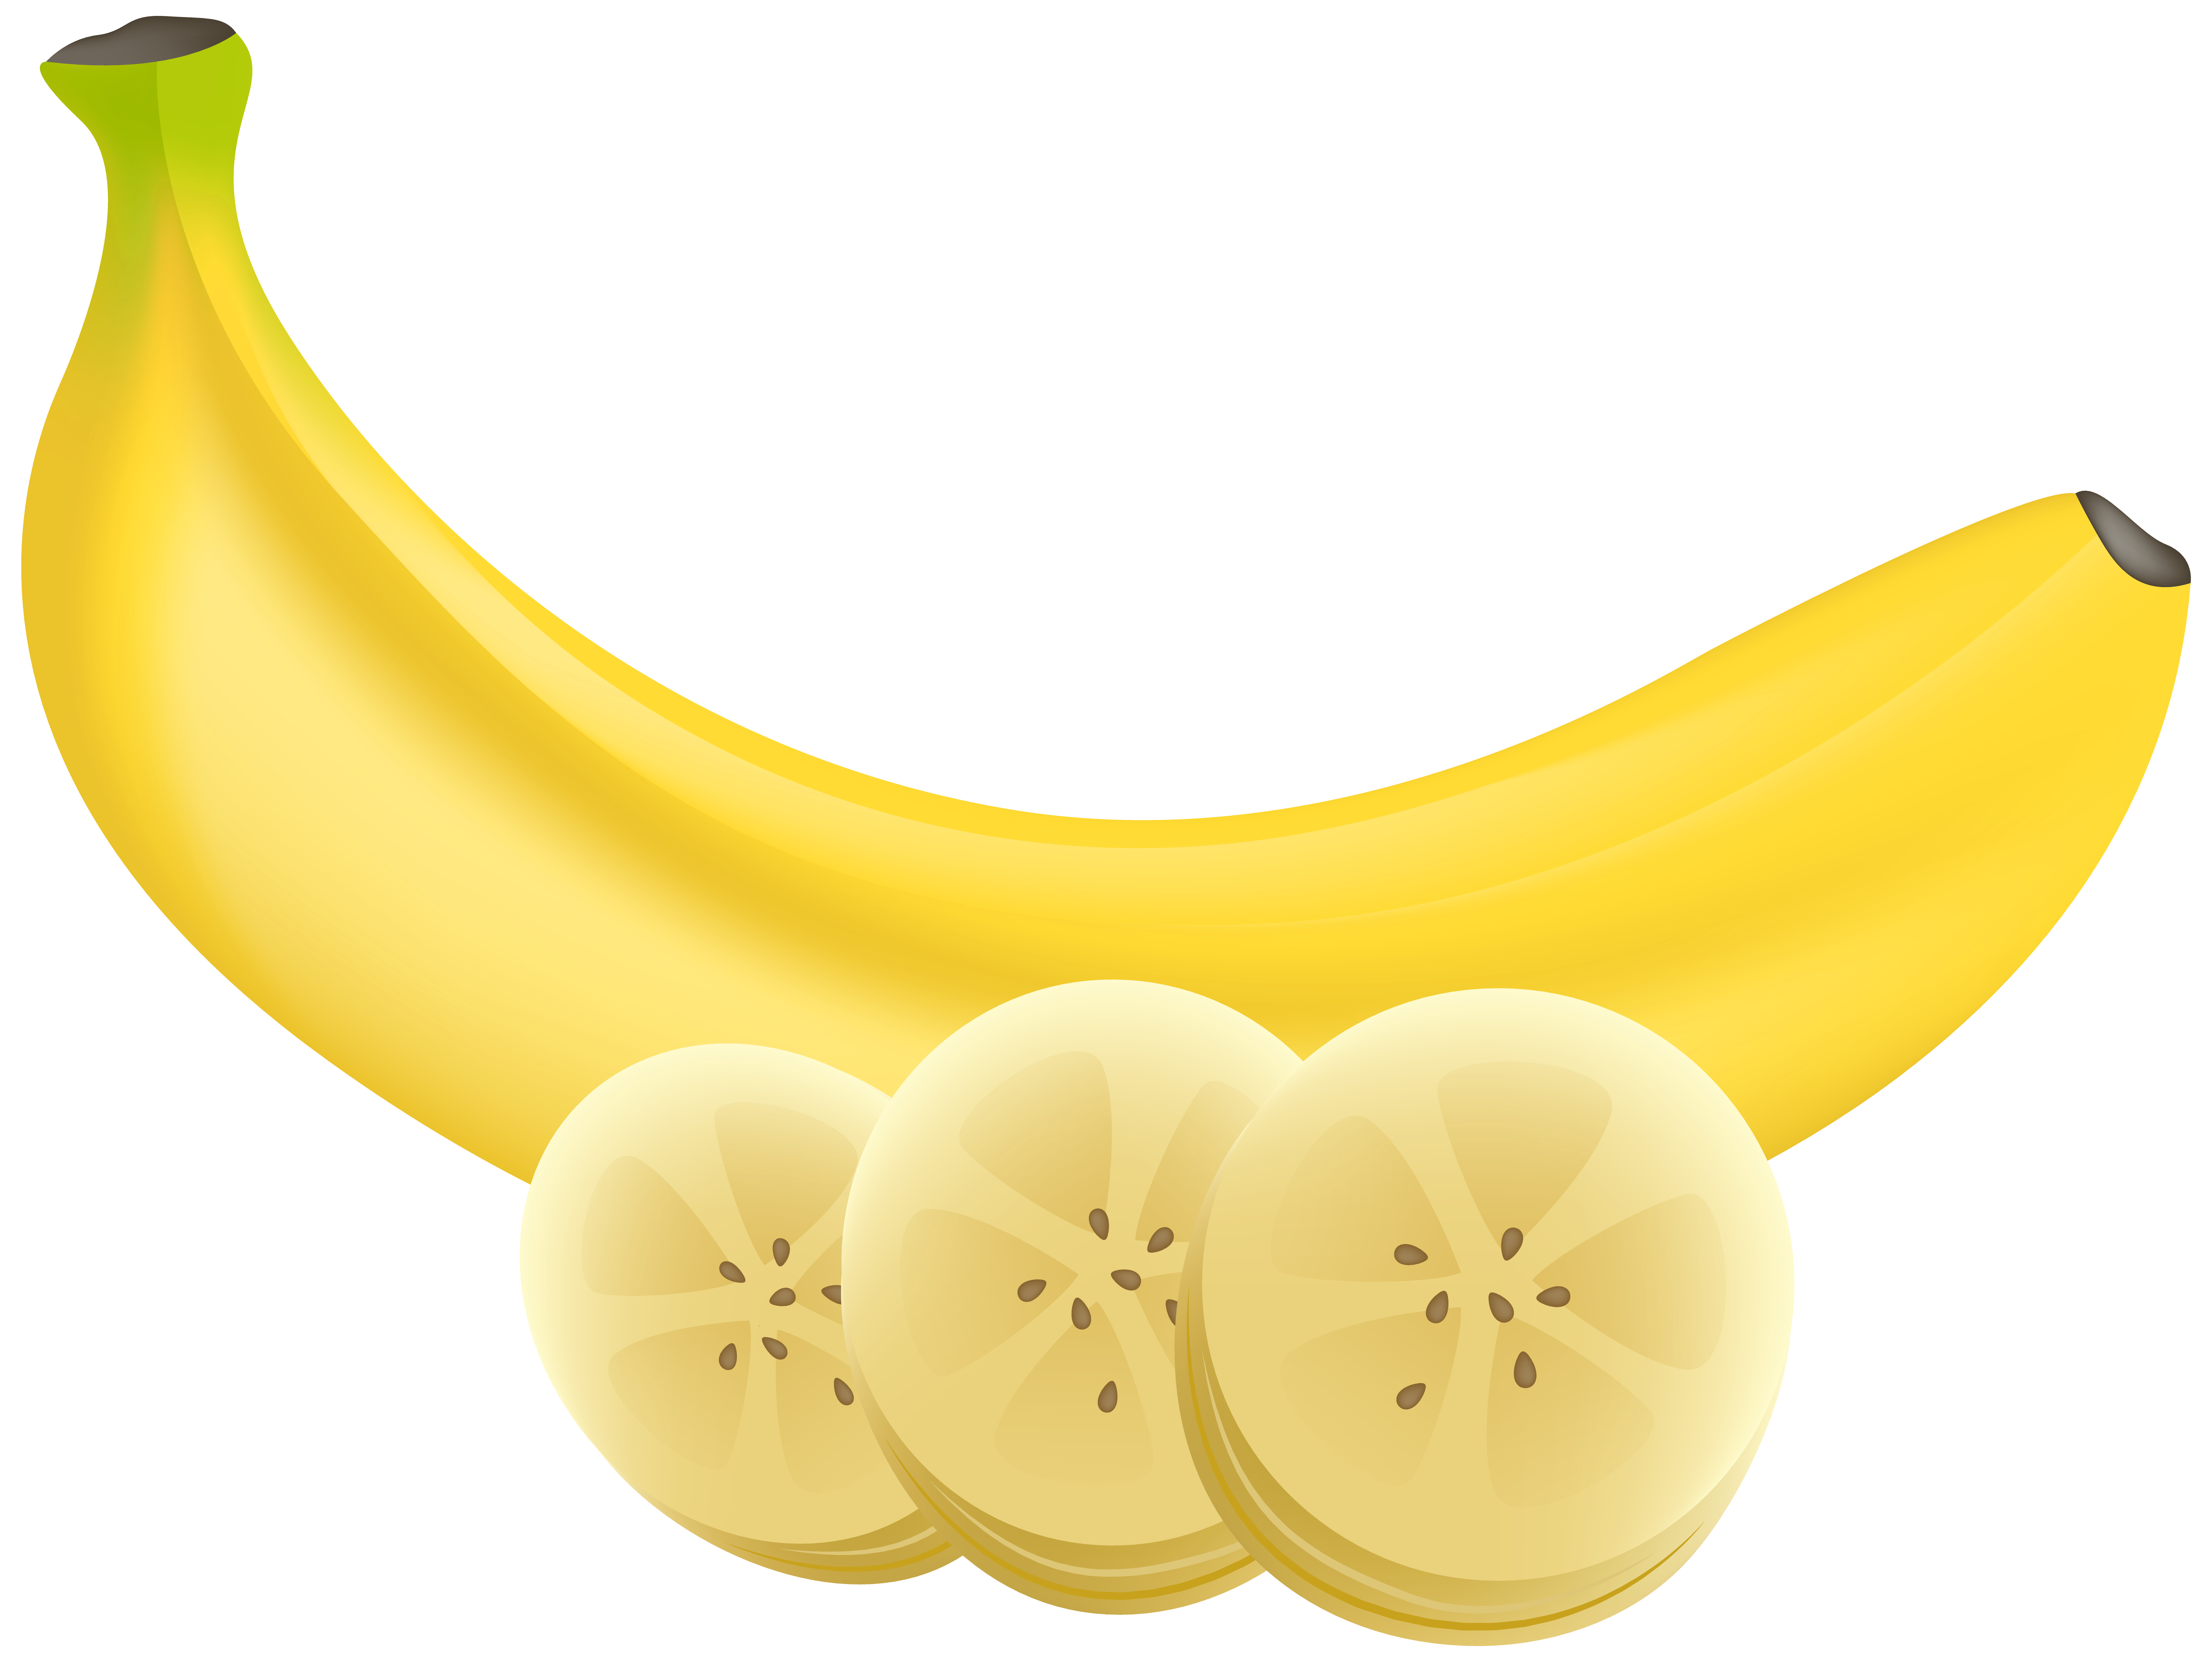 Banana and slices transparent. Bananas clipart heart